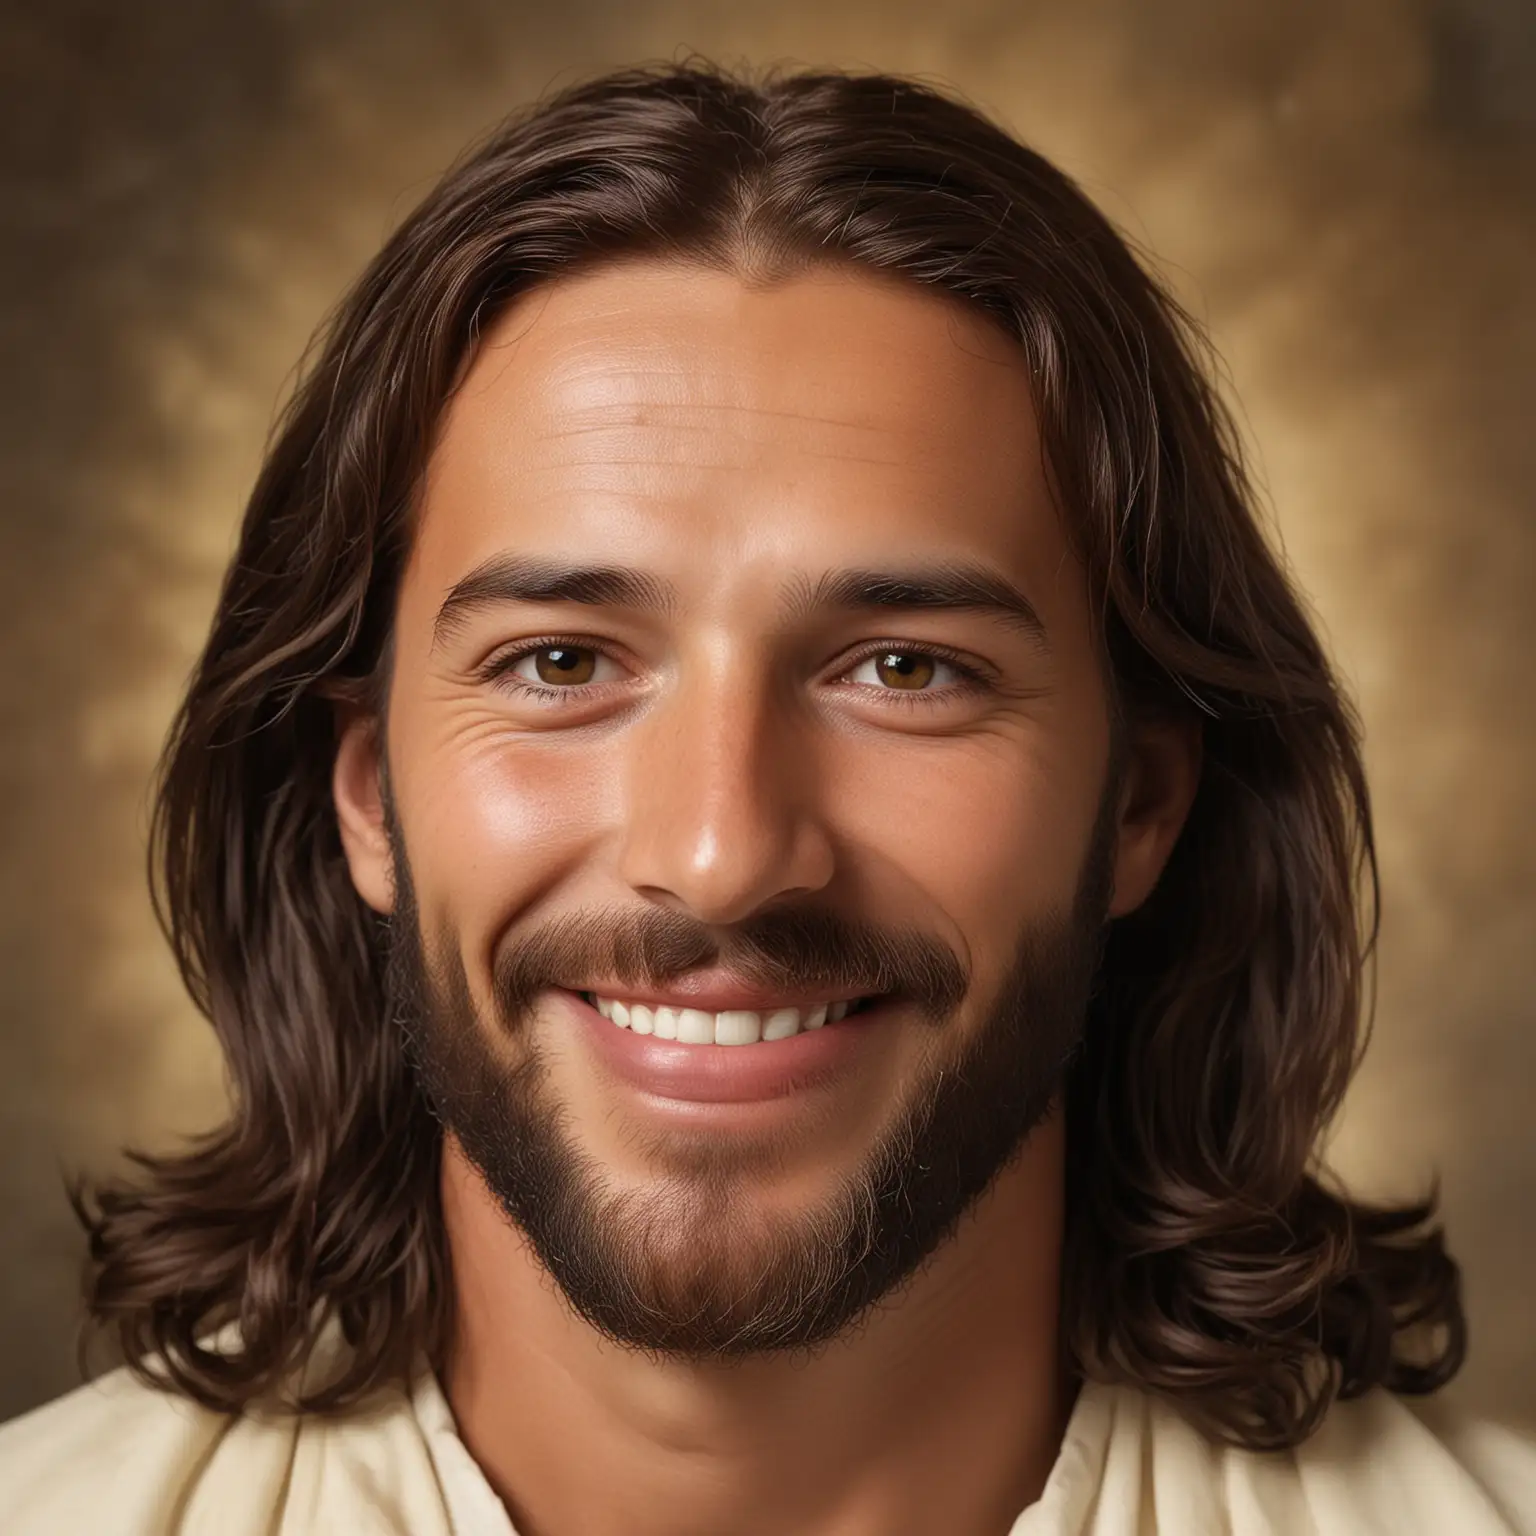 portrait photo of jesus smiling